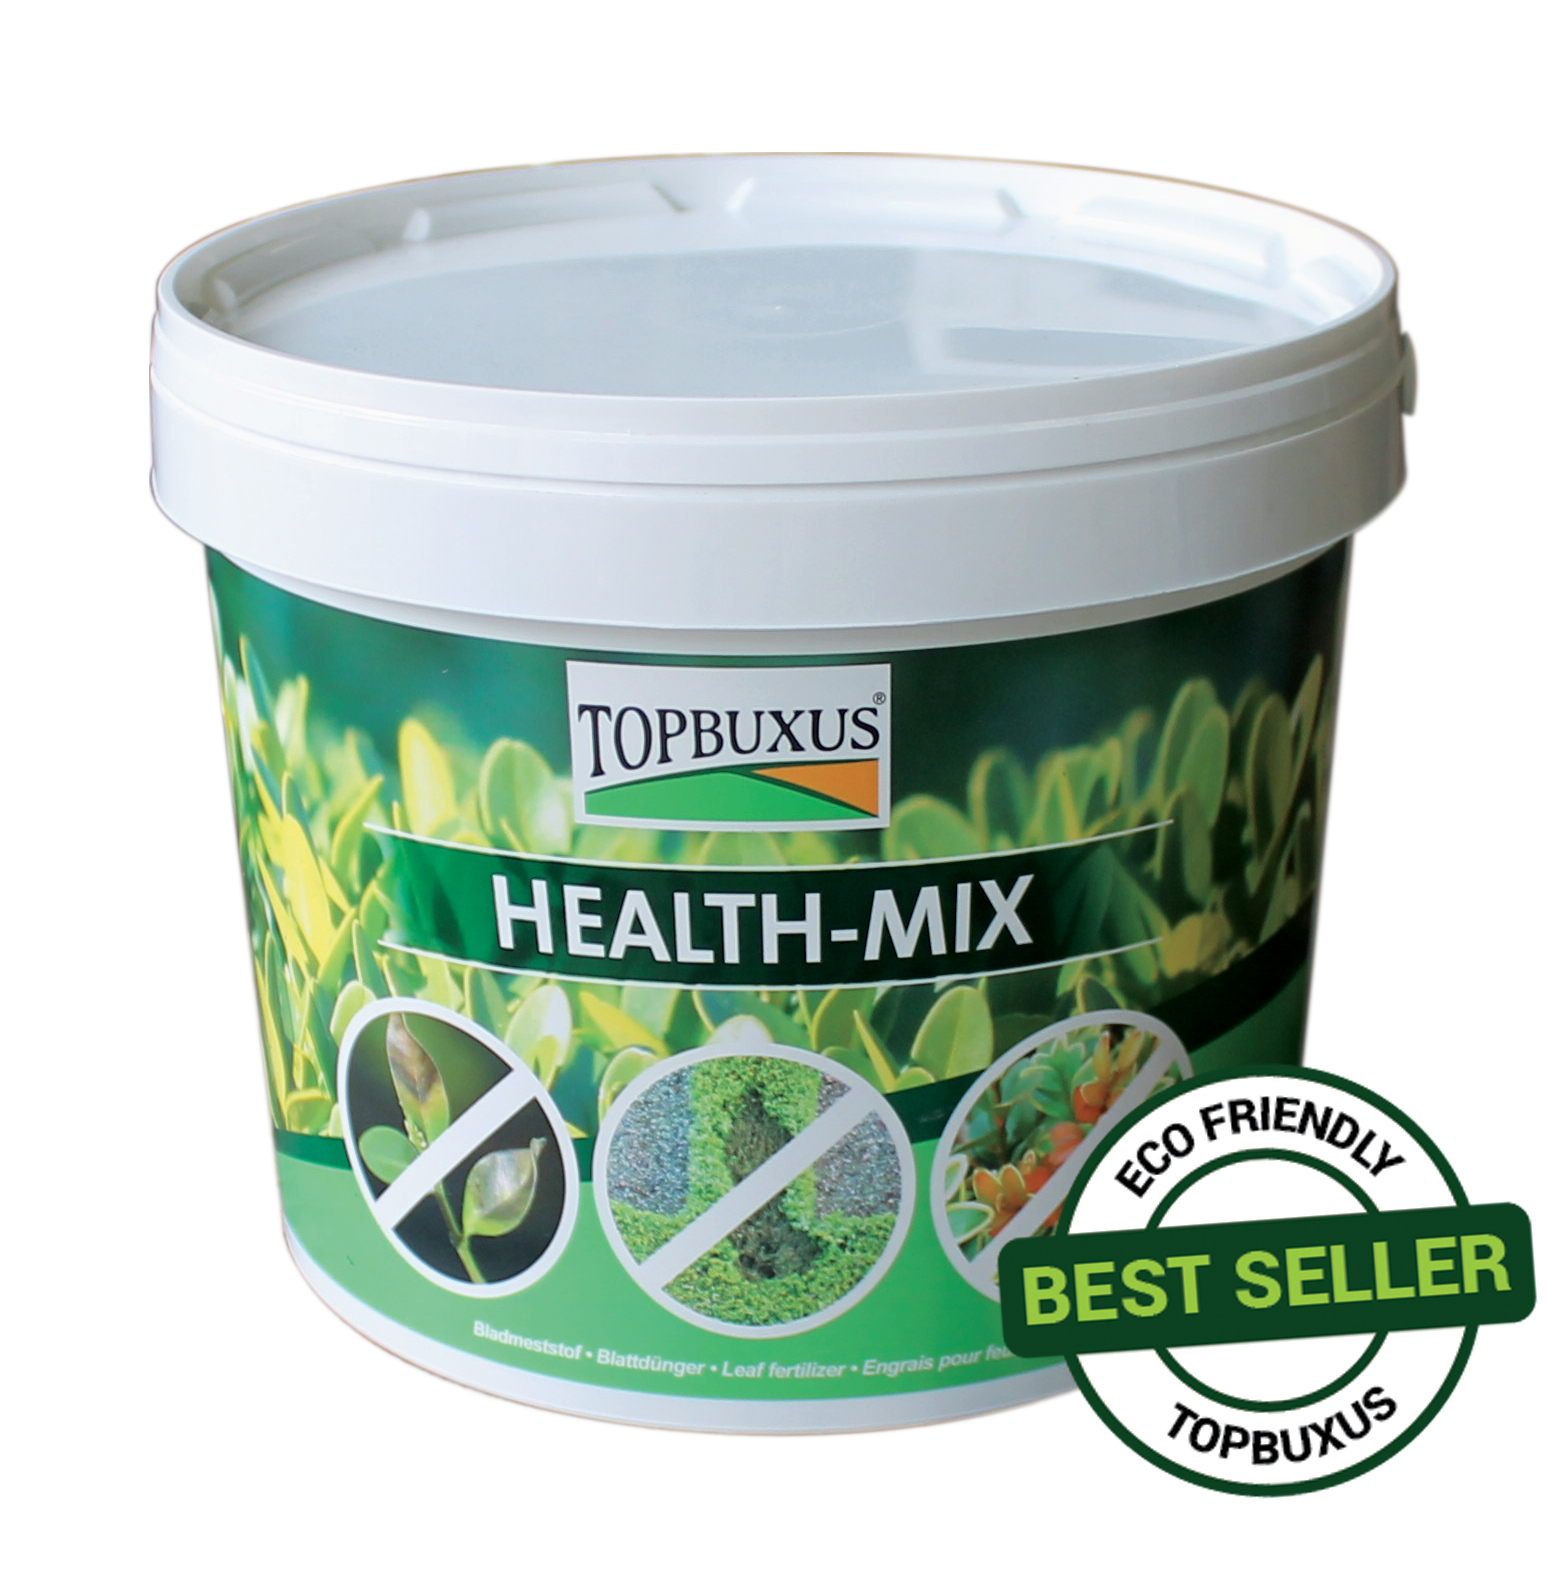 Topbuxus Health-Mix - 40 Tab Bucket